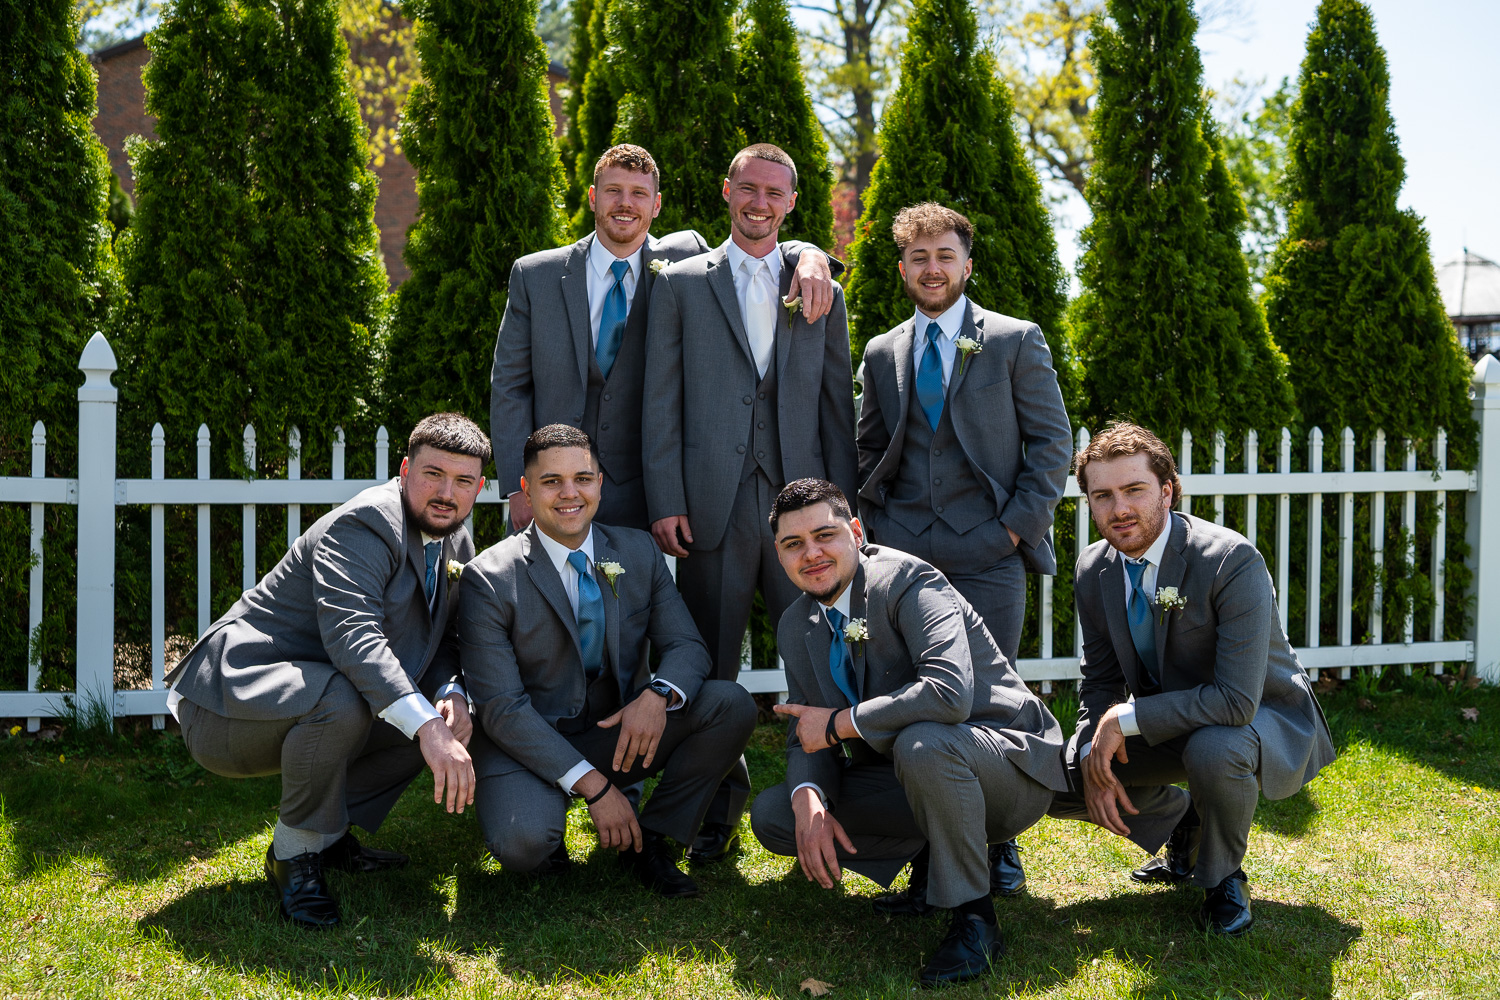 Groom and groomsmen posing before the lakeside wedding